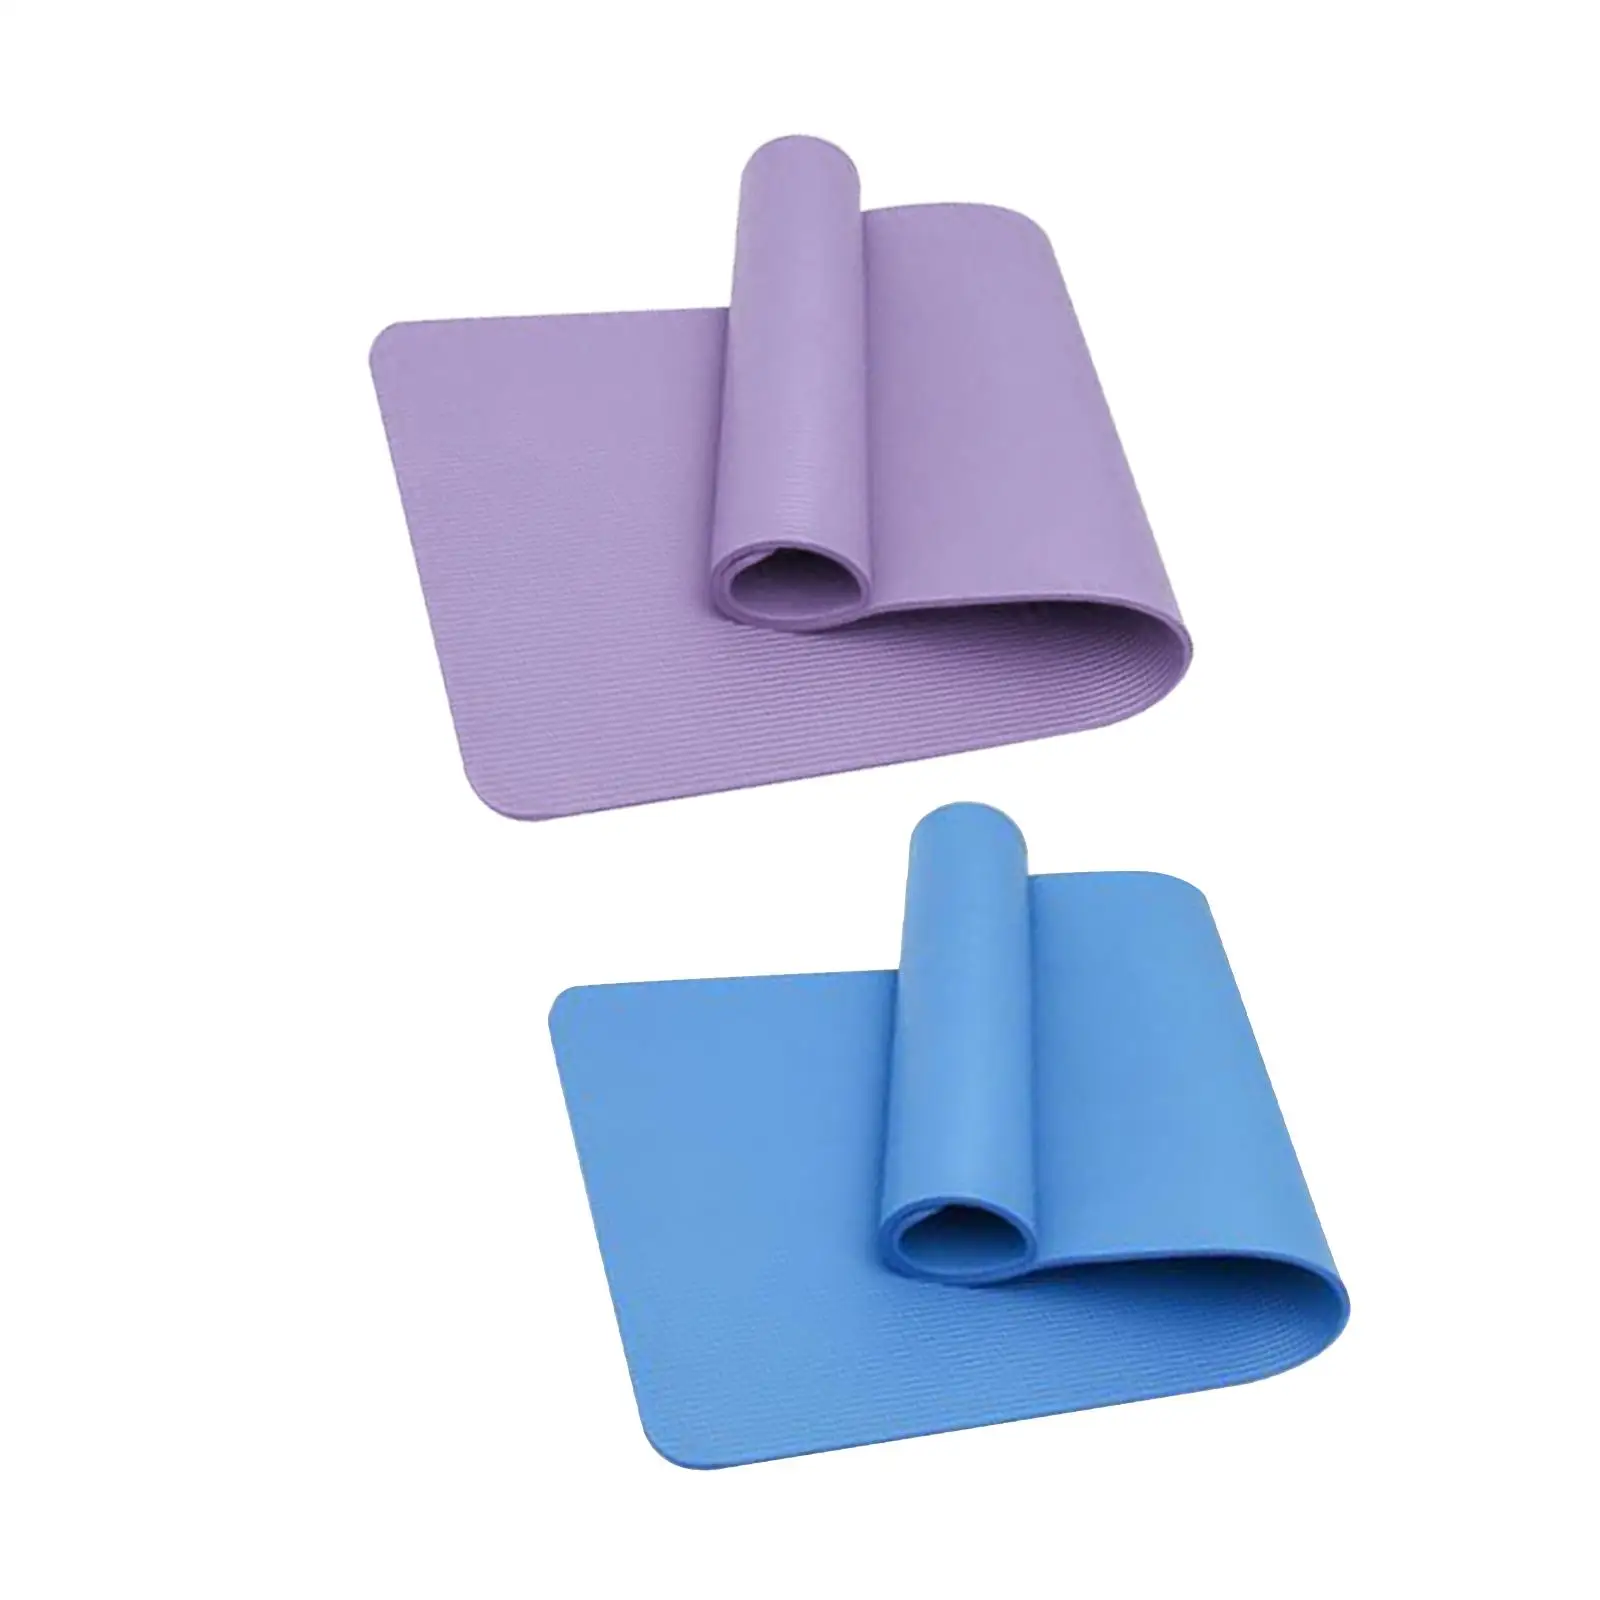 Yoga Mats Cushion Sports Fitness Mats Non Slip Men and Women Widened and Lengthened Beginner High Density Knee Pad for Pilates